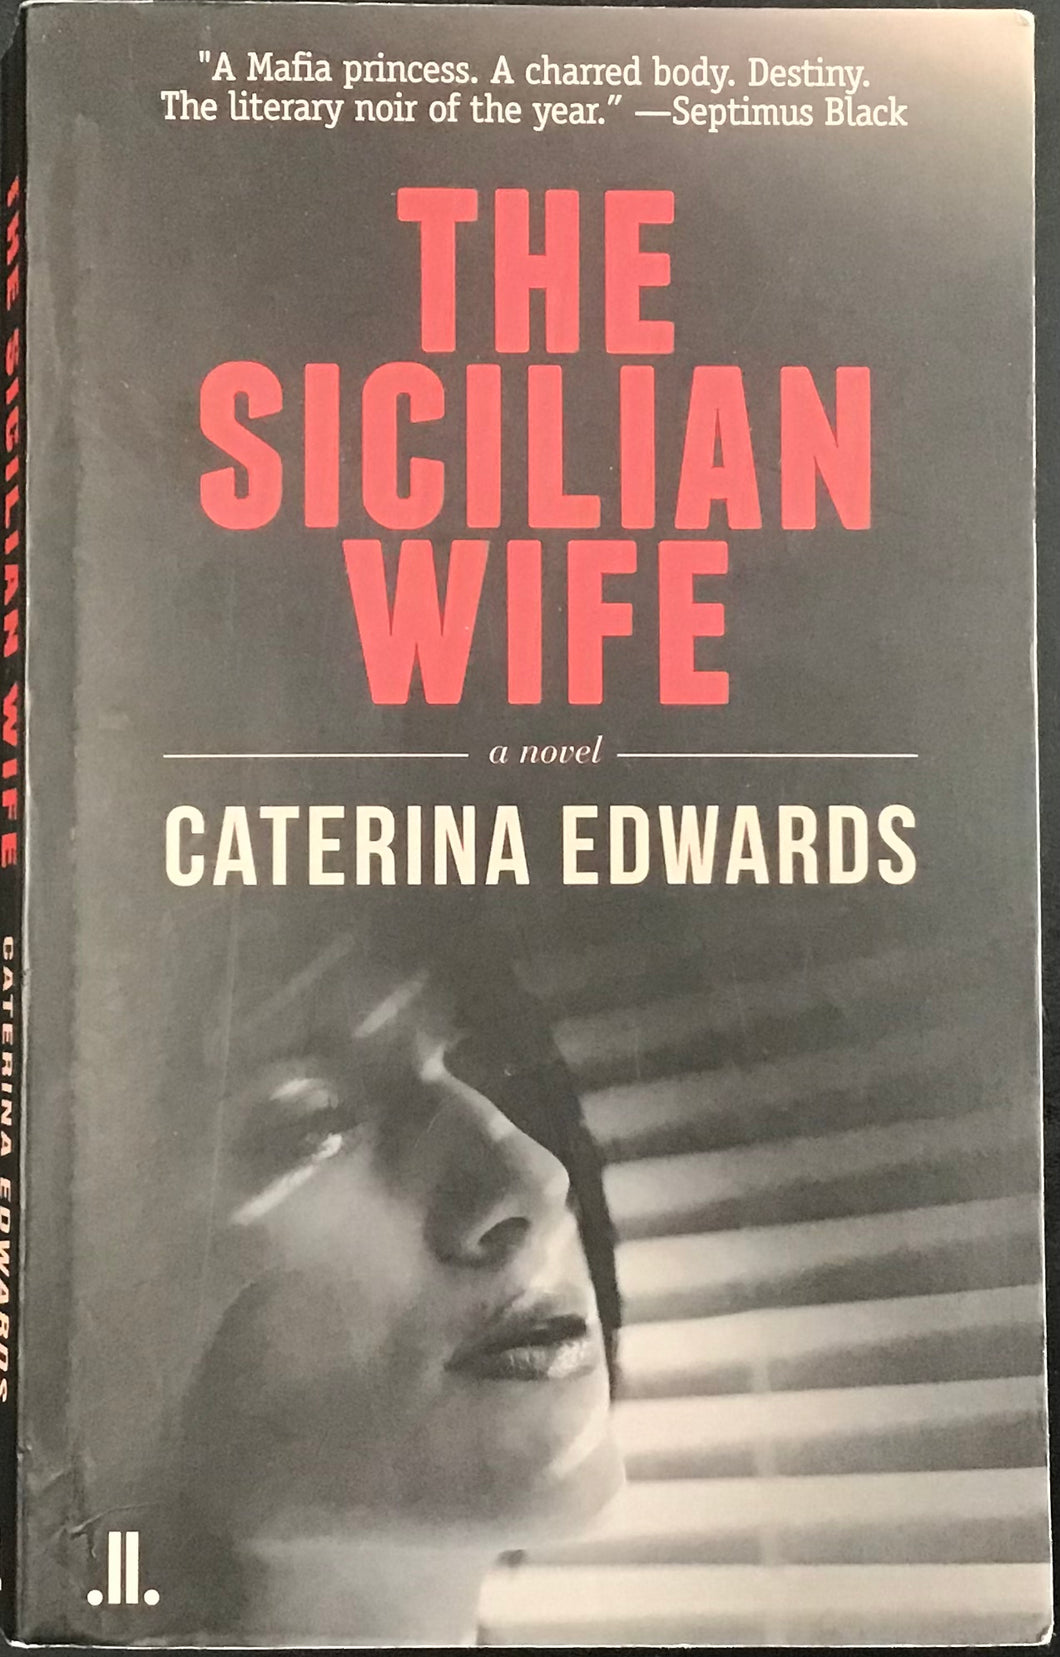 The Sicilian Wife, Caterina Edwards